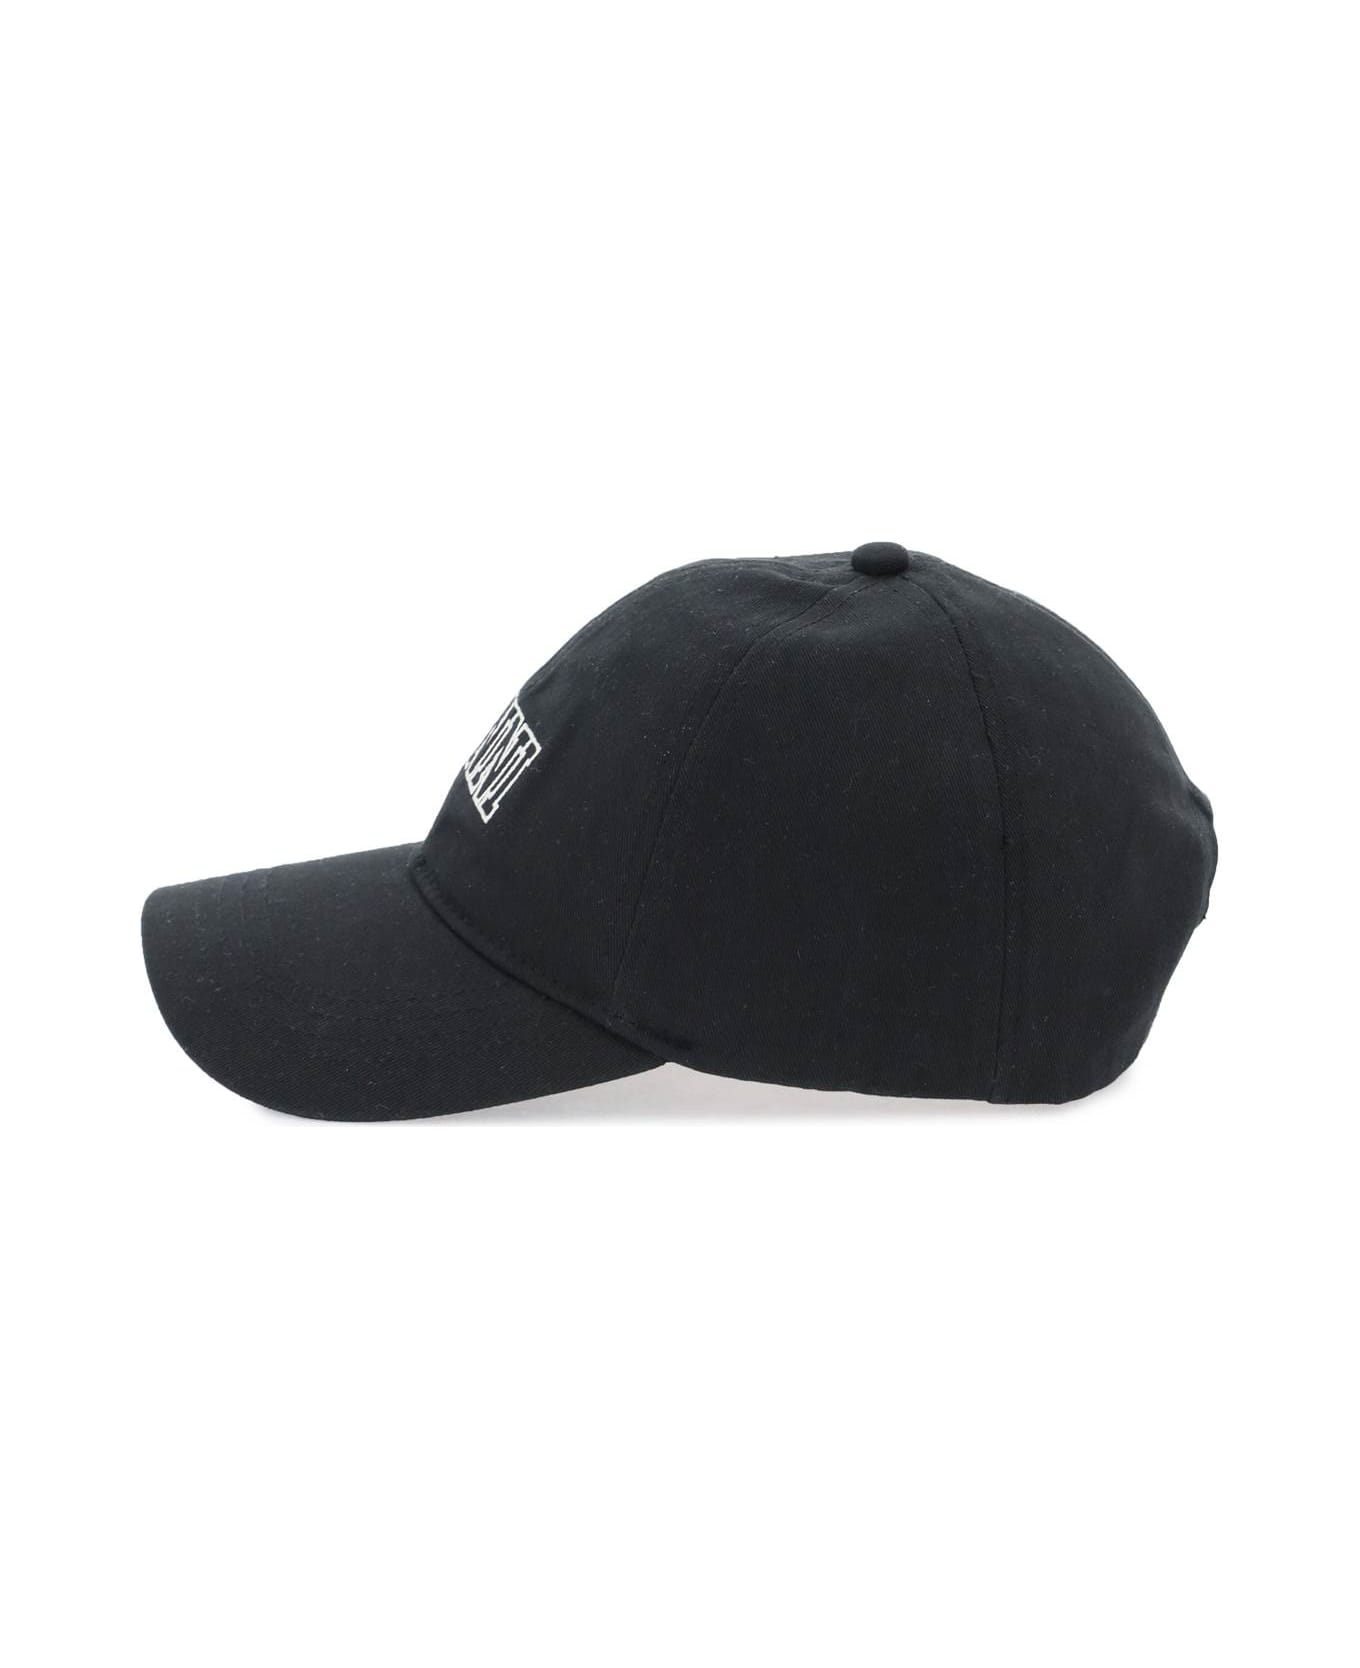 Ganni Black Cotton Hat - BLACK